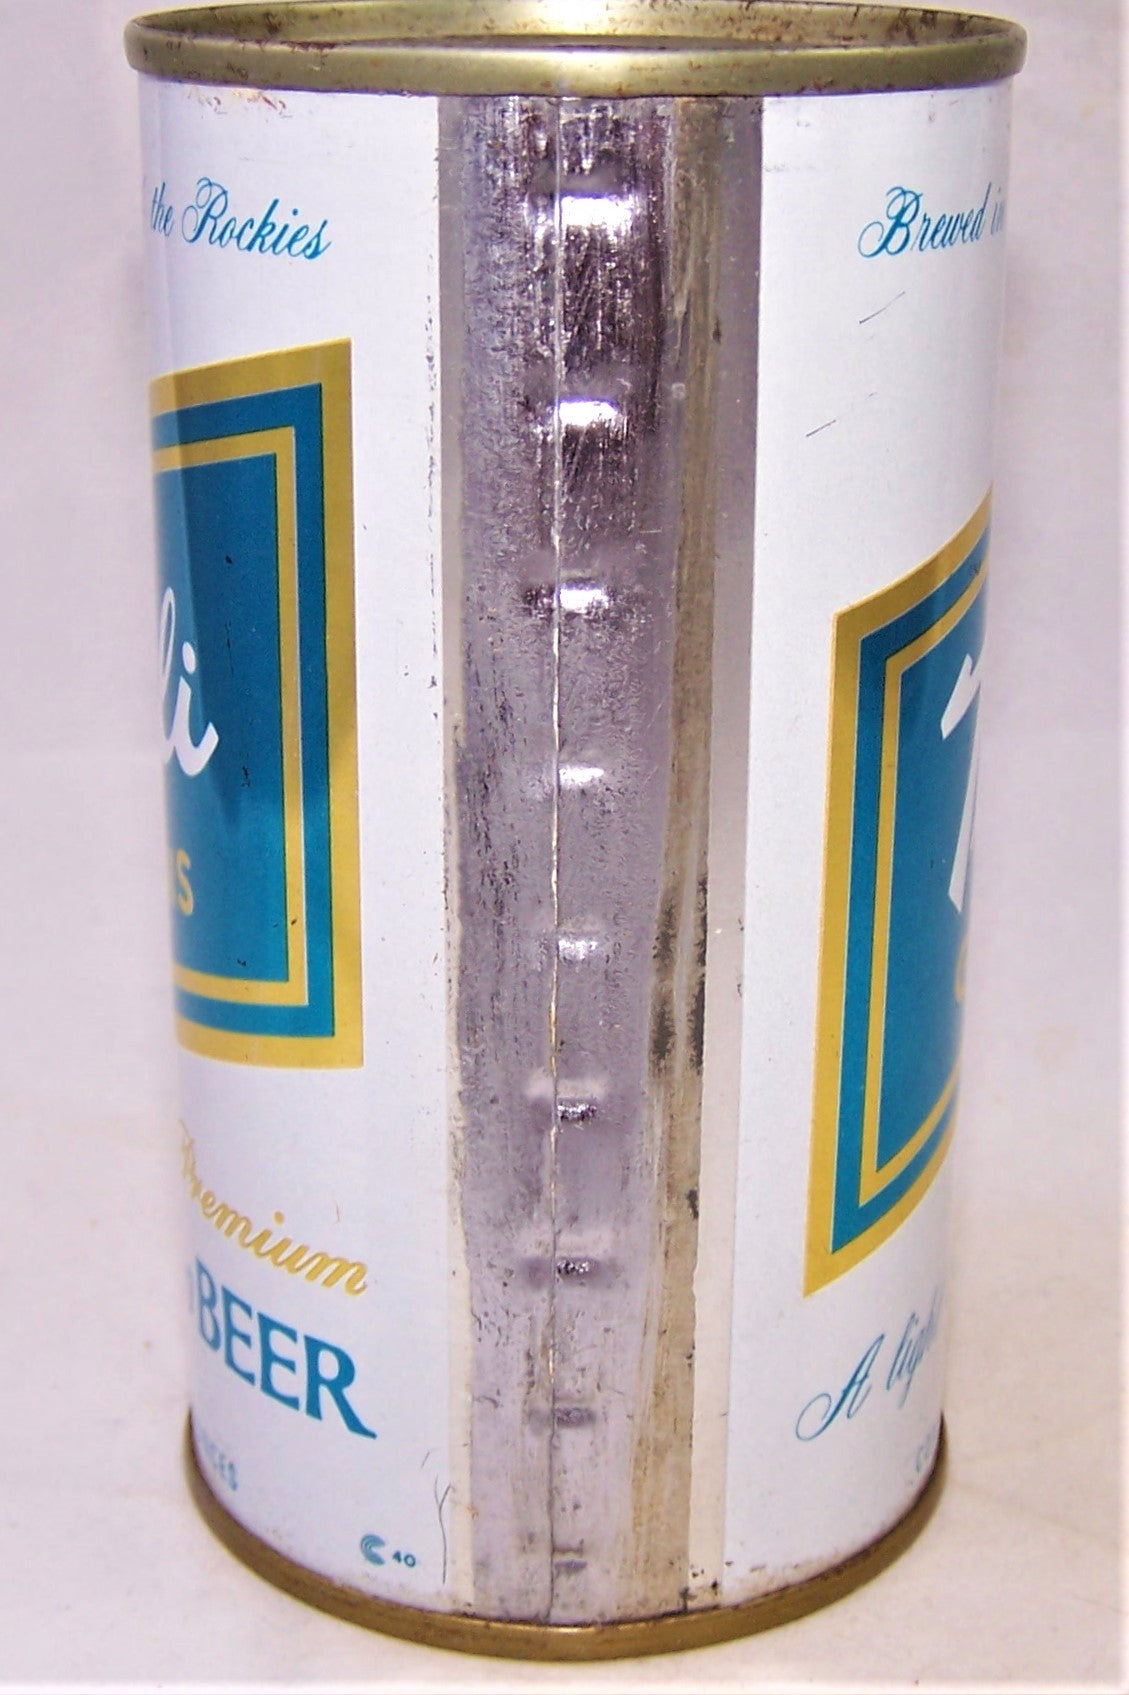 Tivoli Gardens Premium Beer, USBC 139-04, Grade 1 to 1/1+ Sold on 04/04/19